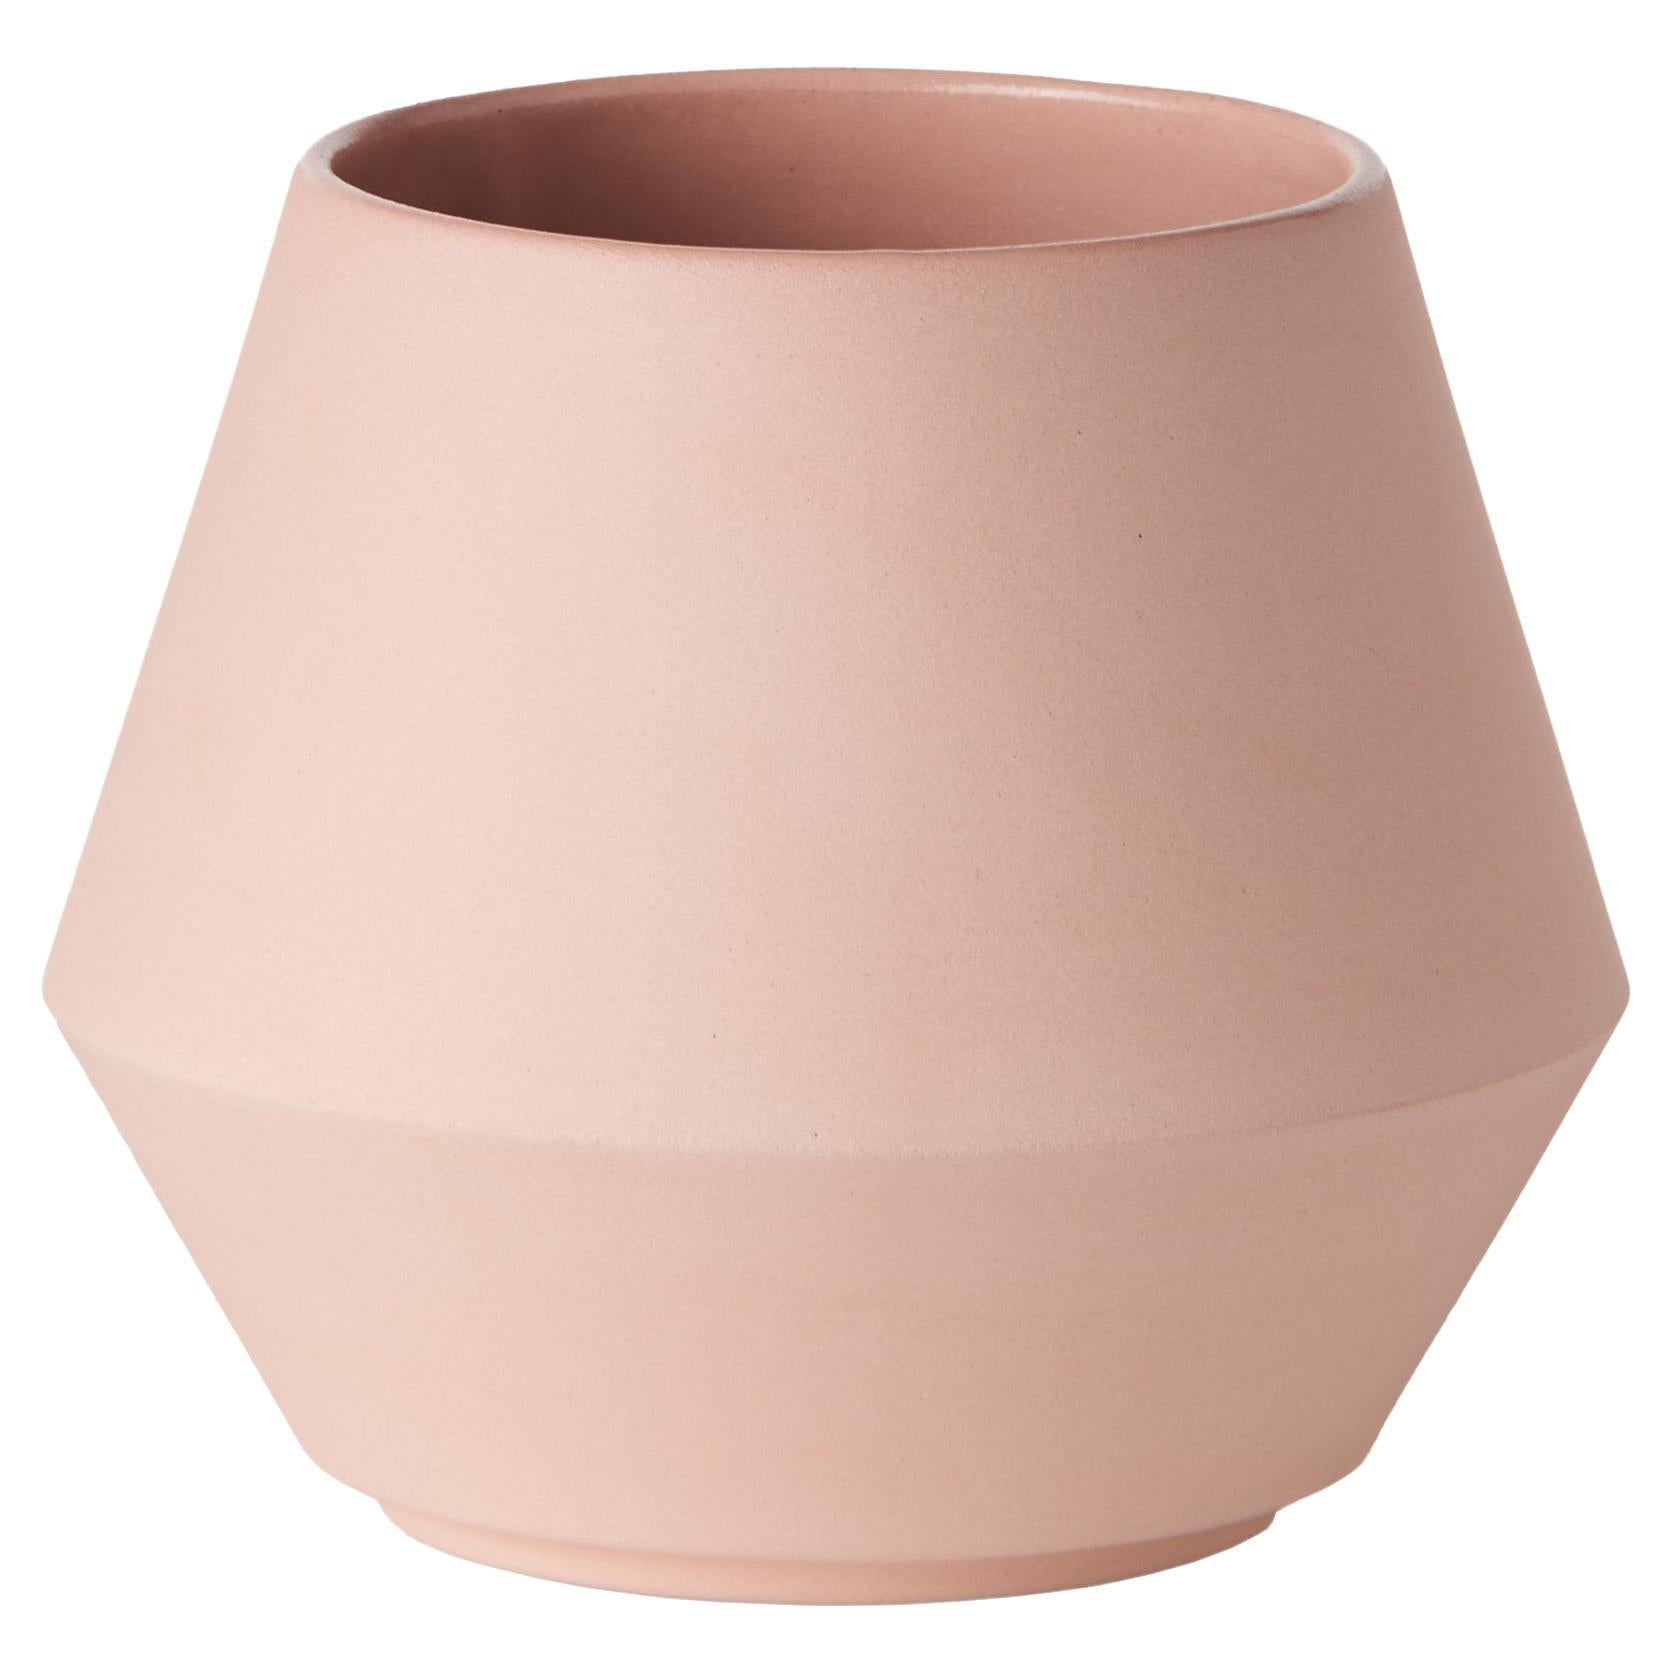 Schneid Studio Unison Sugar Bowl with Lid, Coral For Sale